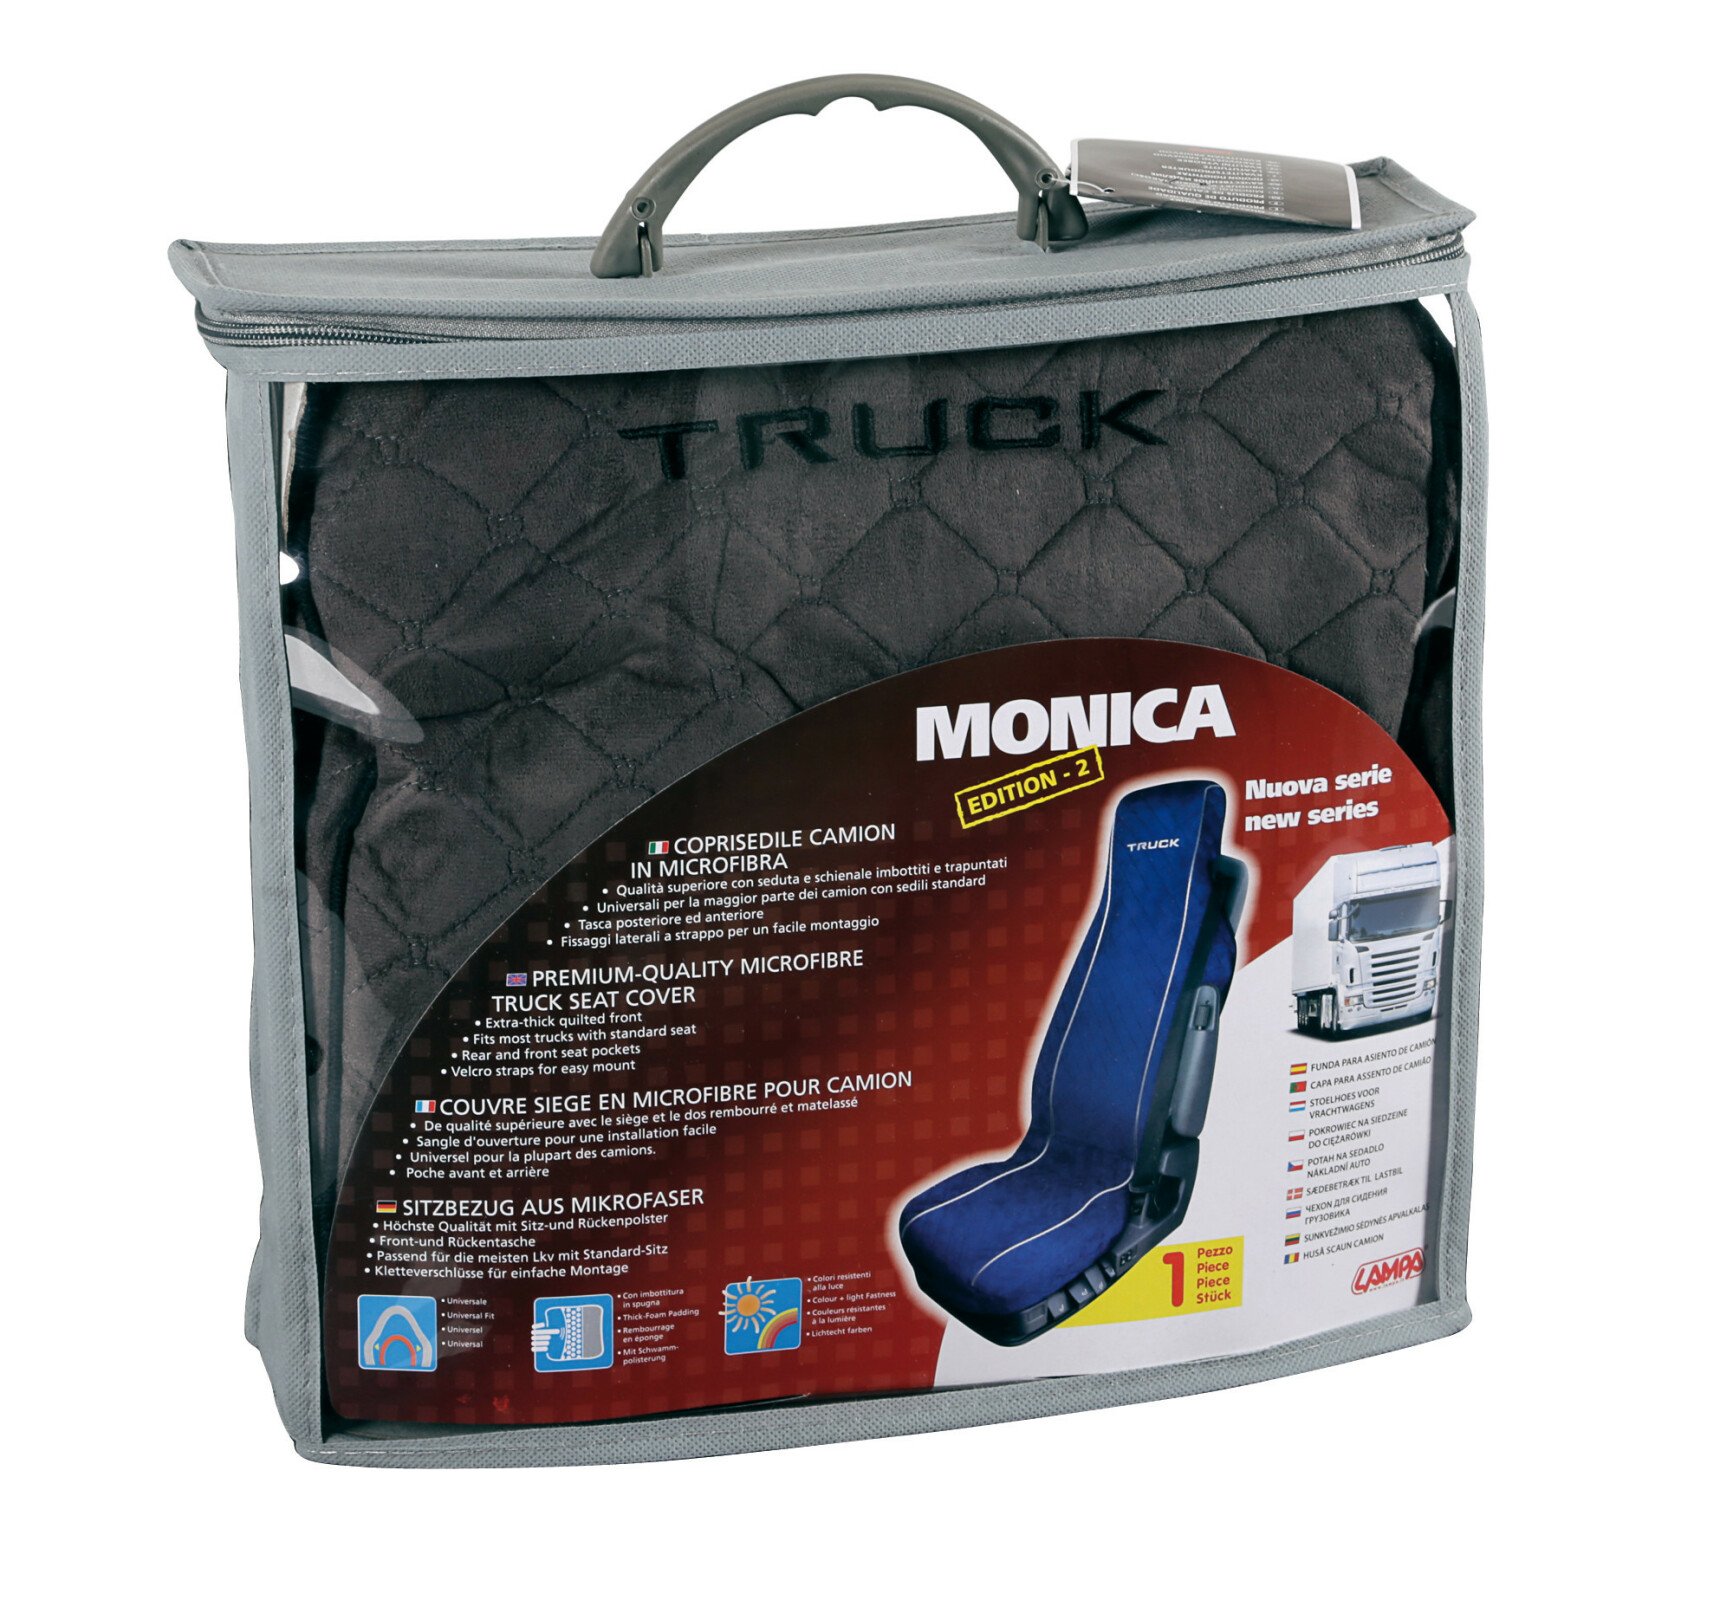 Monica, microfibre truck seat cover - Grey thumb